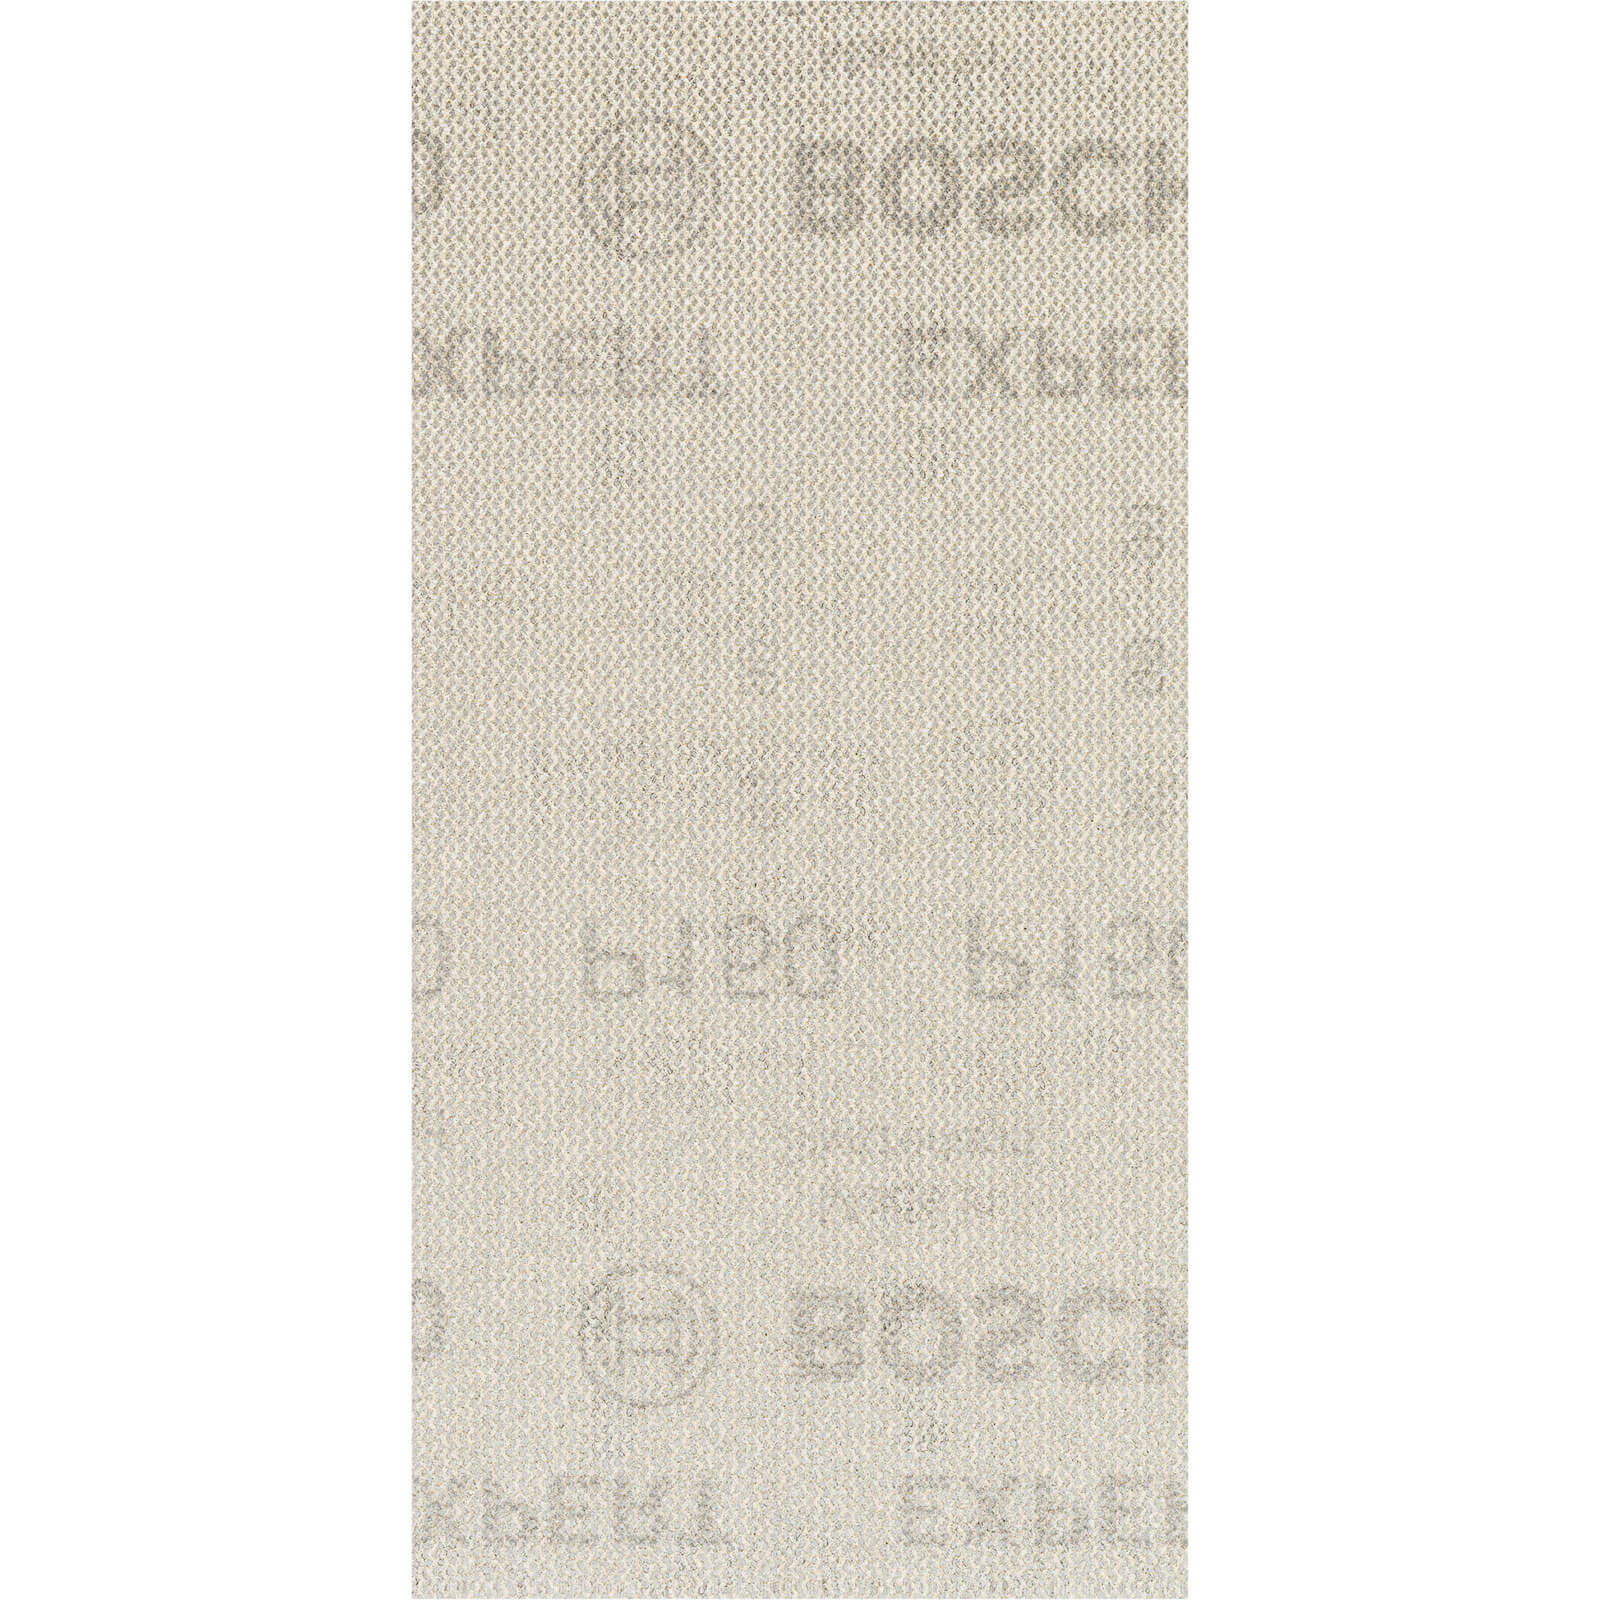 Image of Bosch Expert M480 93mm x 186mm Net Abrasive Sanding Sheets 93mm x 186mm 150g Pack of 50